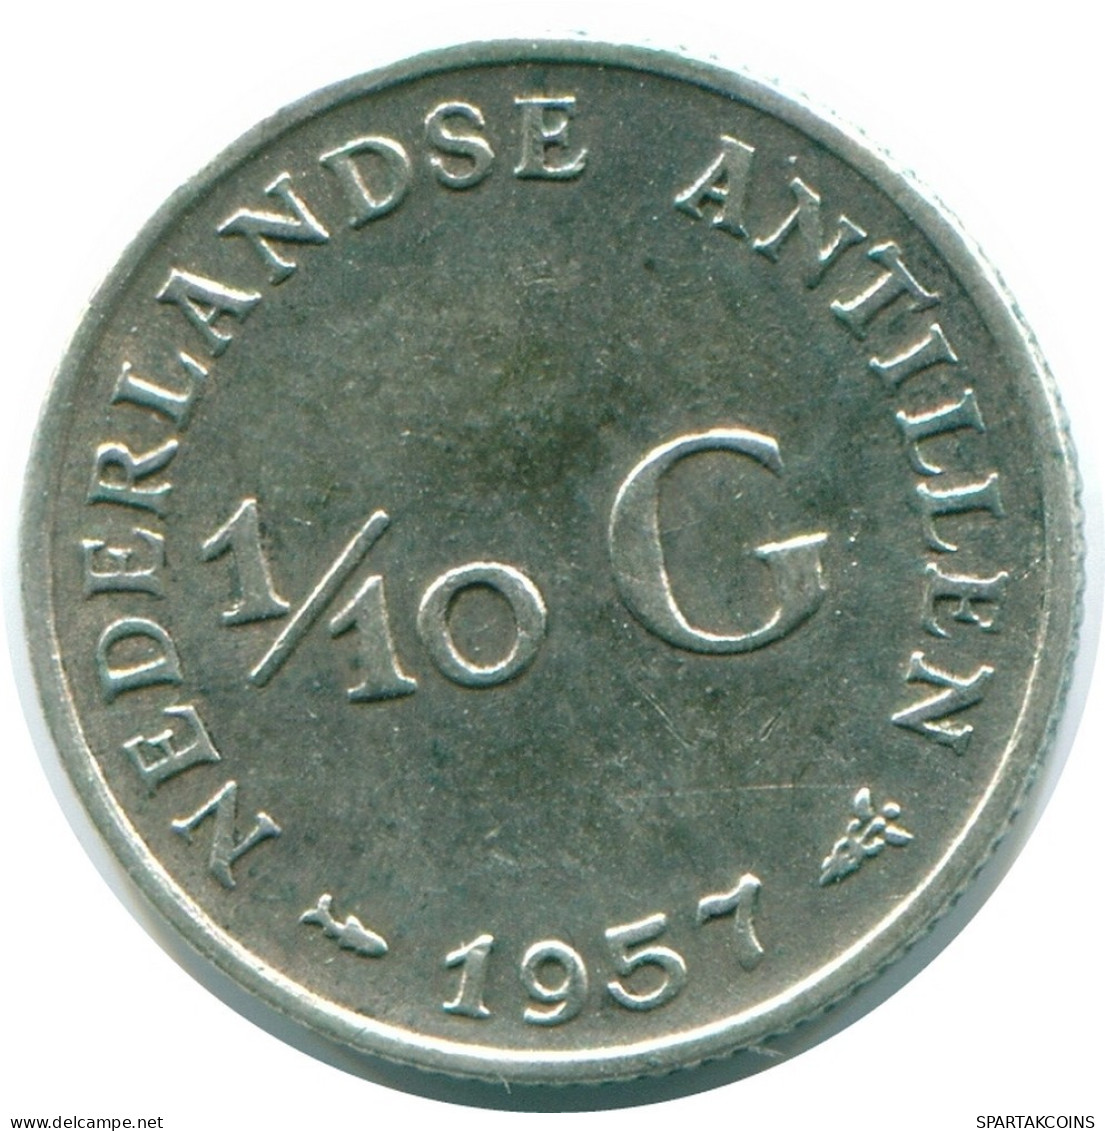 1/10 GULDEN 1957 NETHERLANDS ANTILLES SILVER Colonial Coin #NL12155.3.U.A - Niederländische Antillen